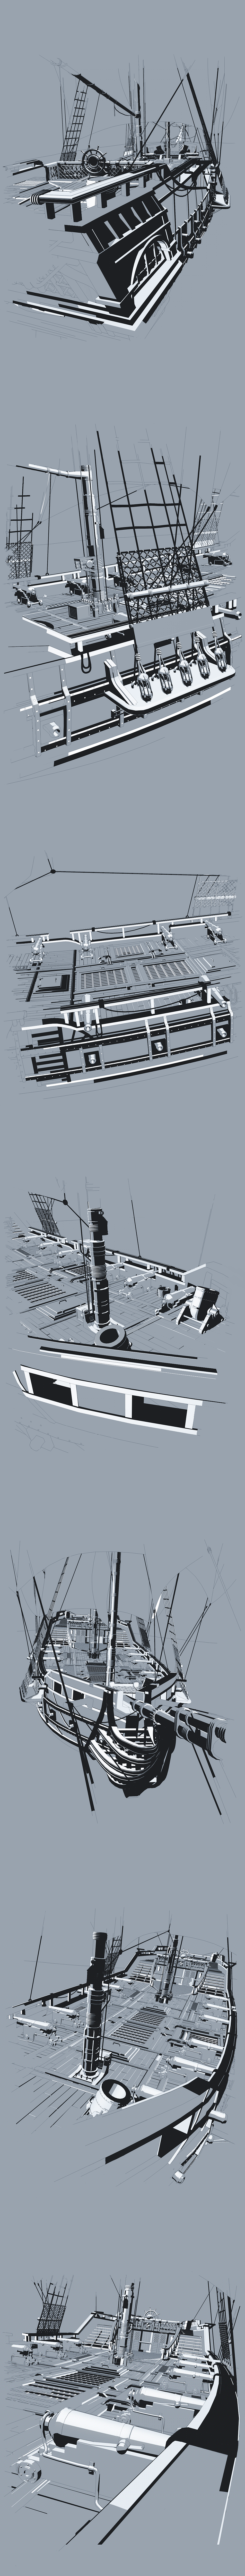 ion lucin ION pirate ship Jackdaw Brig graphical 3D illustration 3D 3d modeling modeling cinema 4d c4d